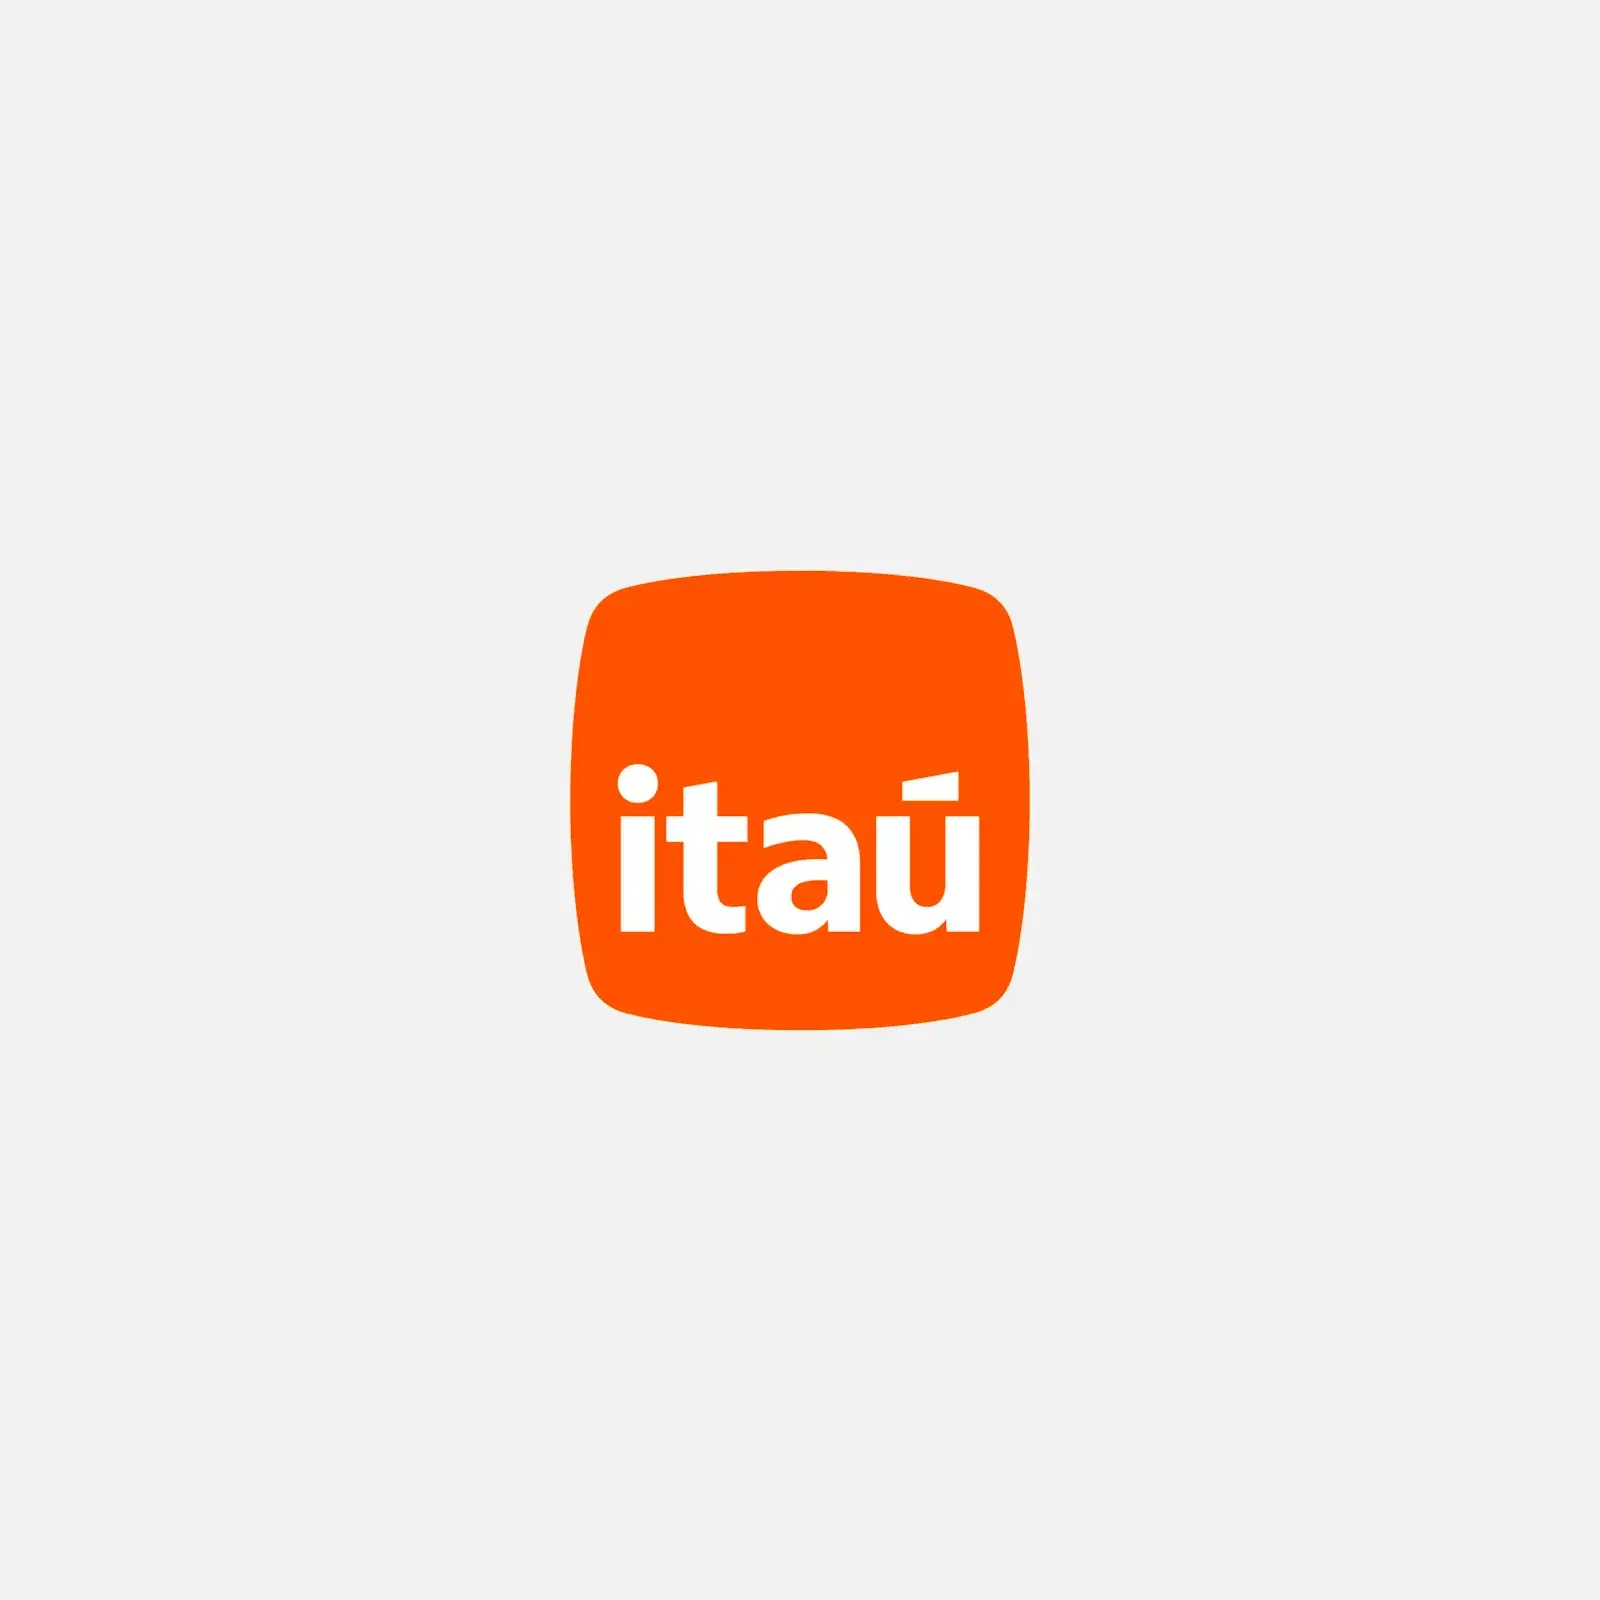 Banco Itaú's New Branding and Visual Identity by Pentagram